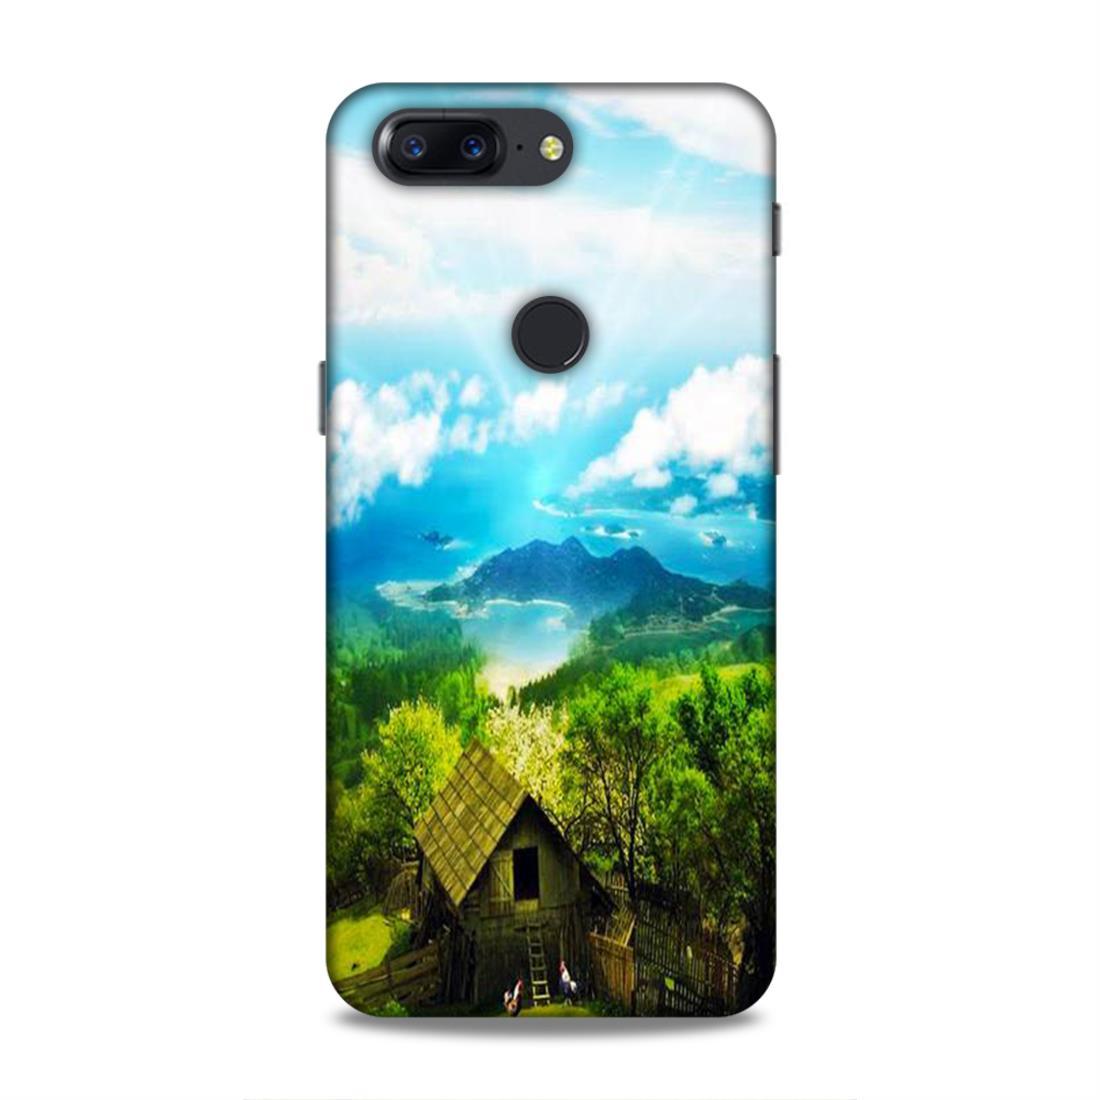 Peacefull Natur OnePlus 5T Mobile Cover